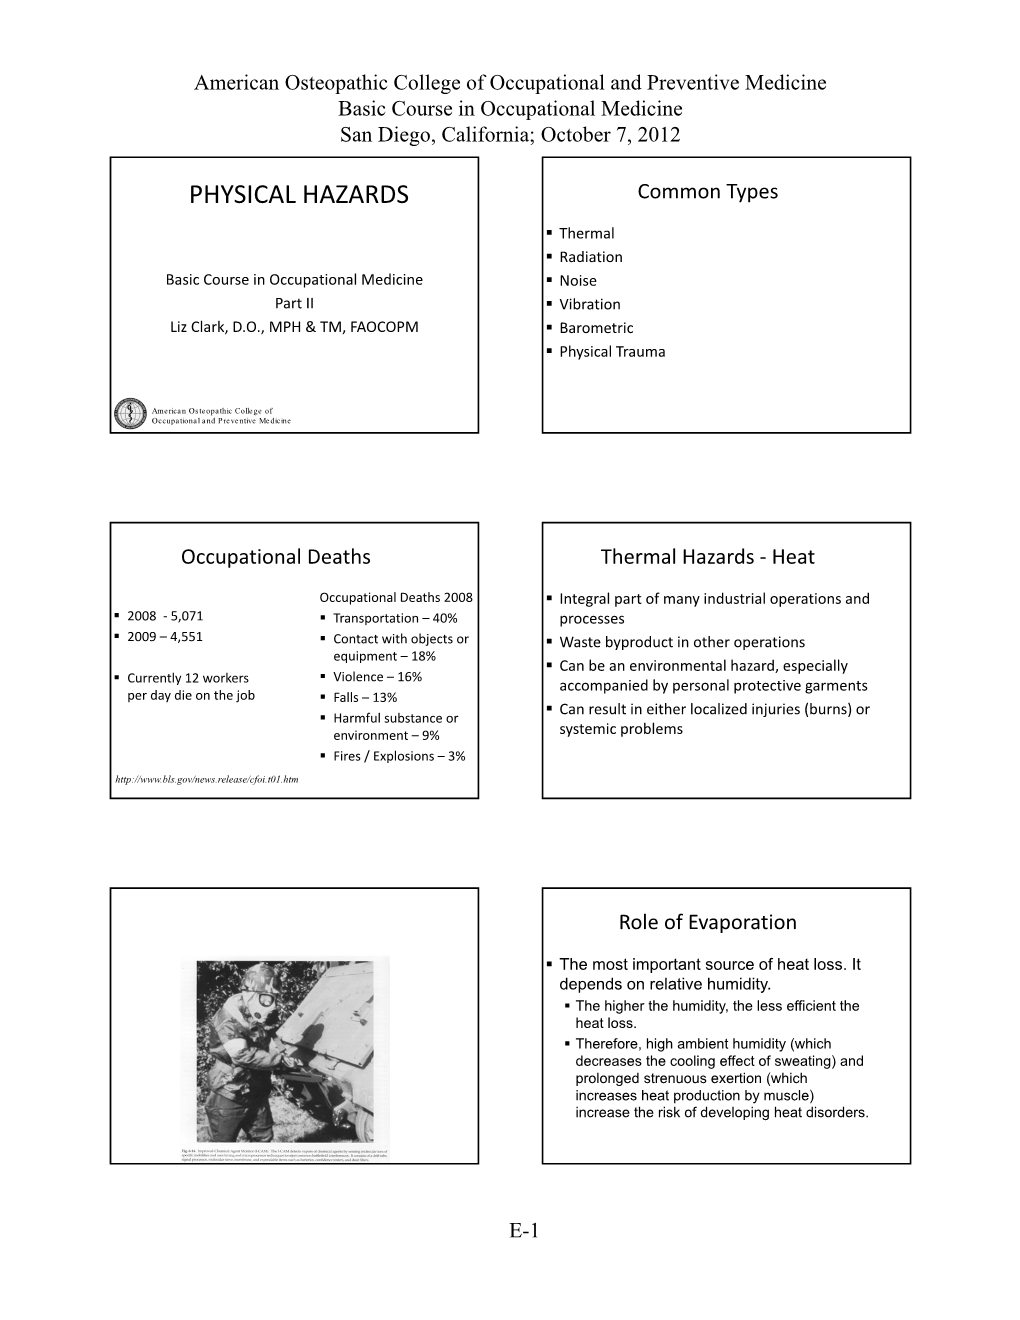 PHYSICAL HAZARDS Common Types